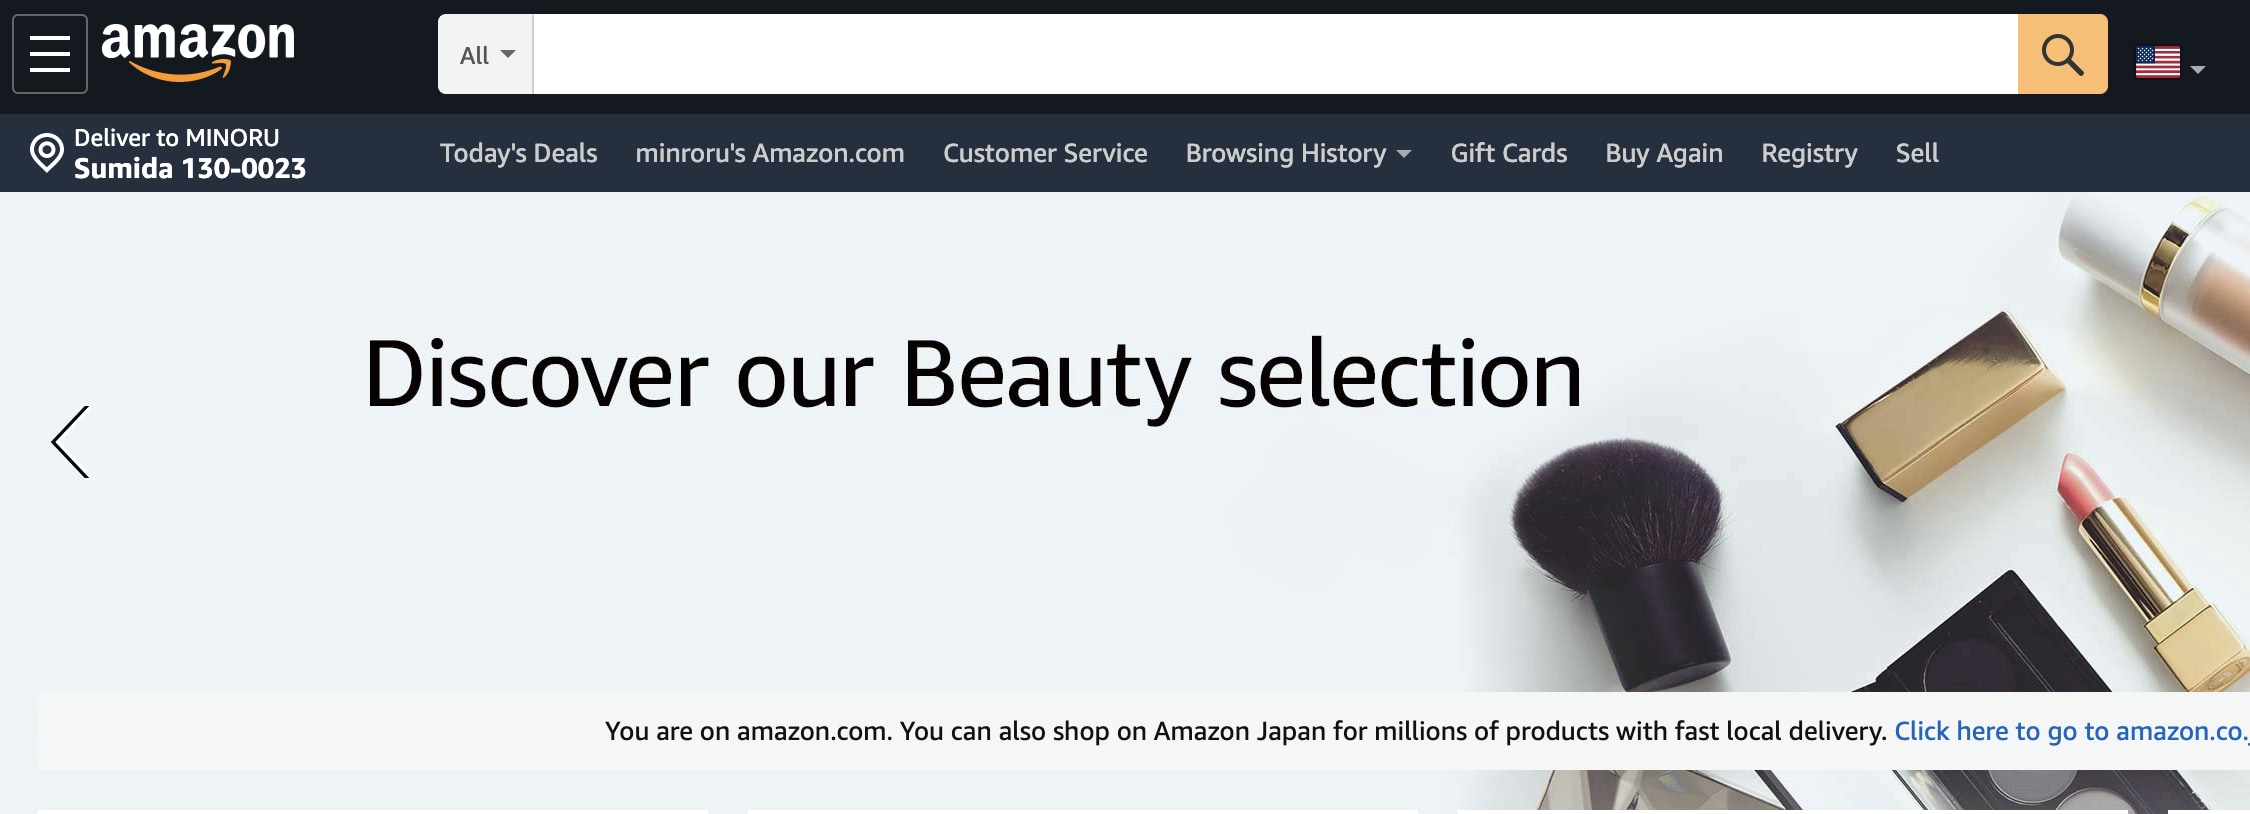 Amazon_com